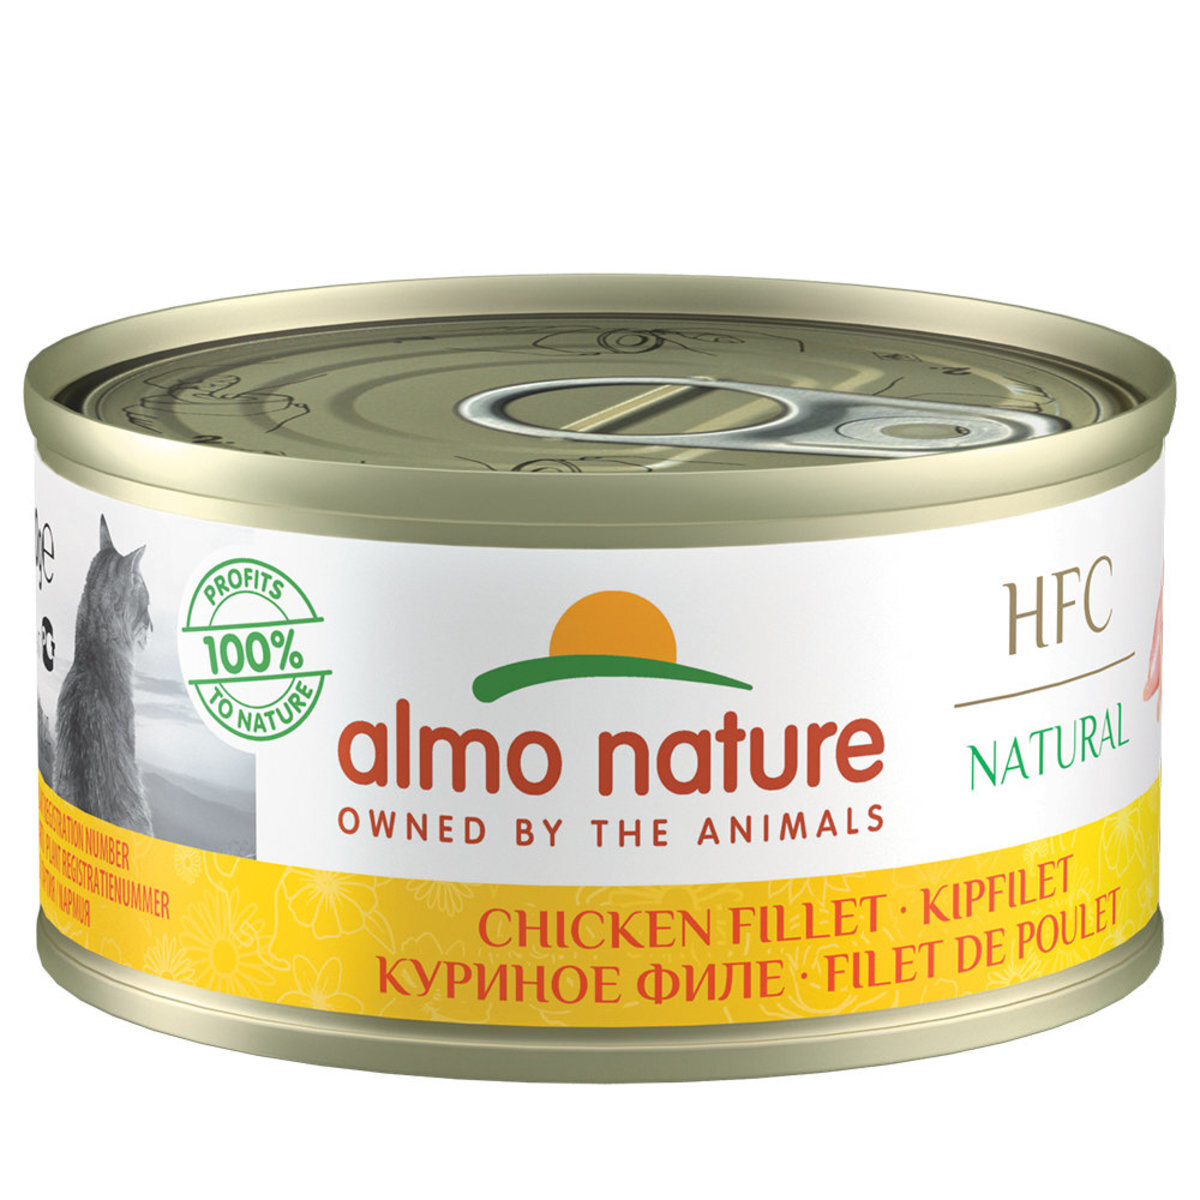 HFC Cat Canned - Chicken Fillet Natural 70g 9016